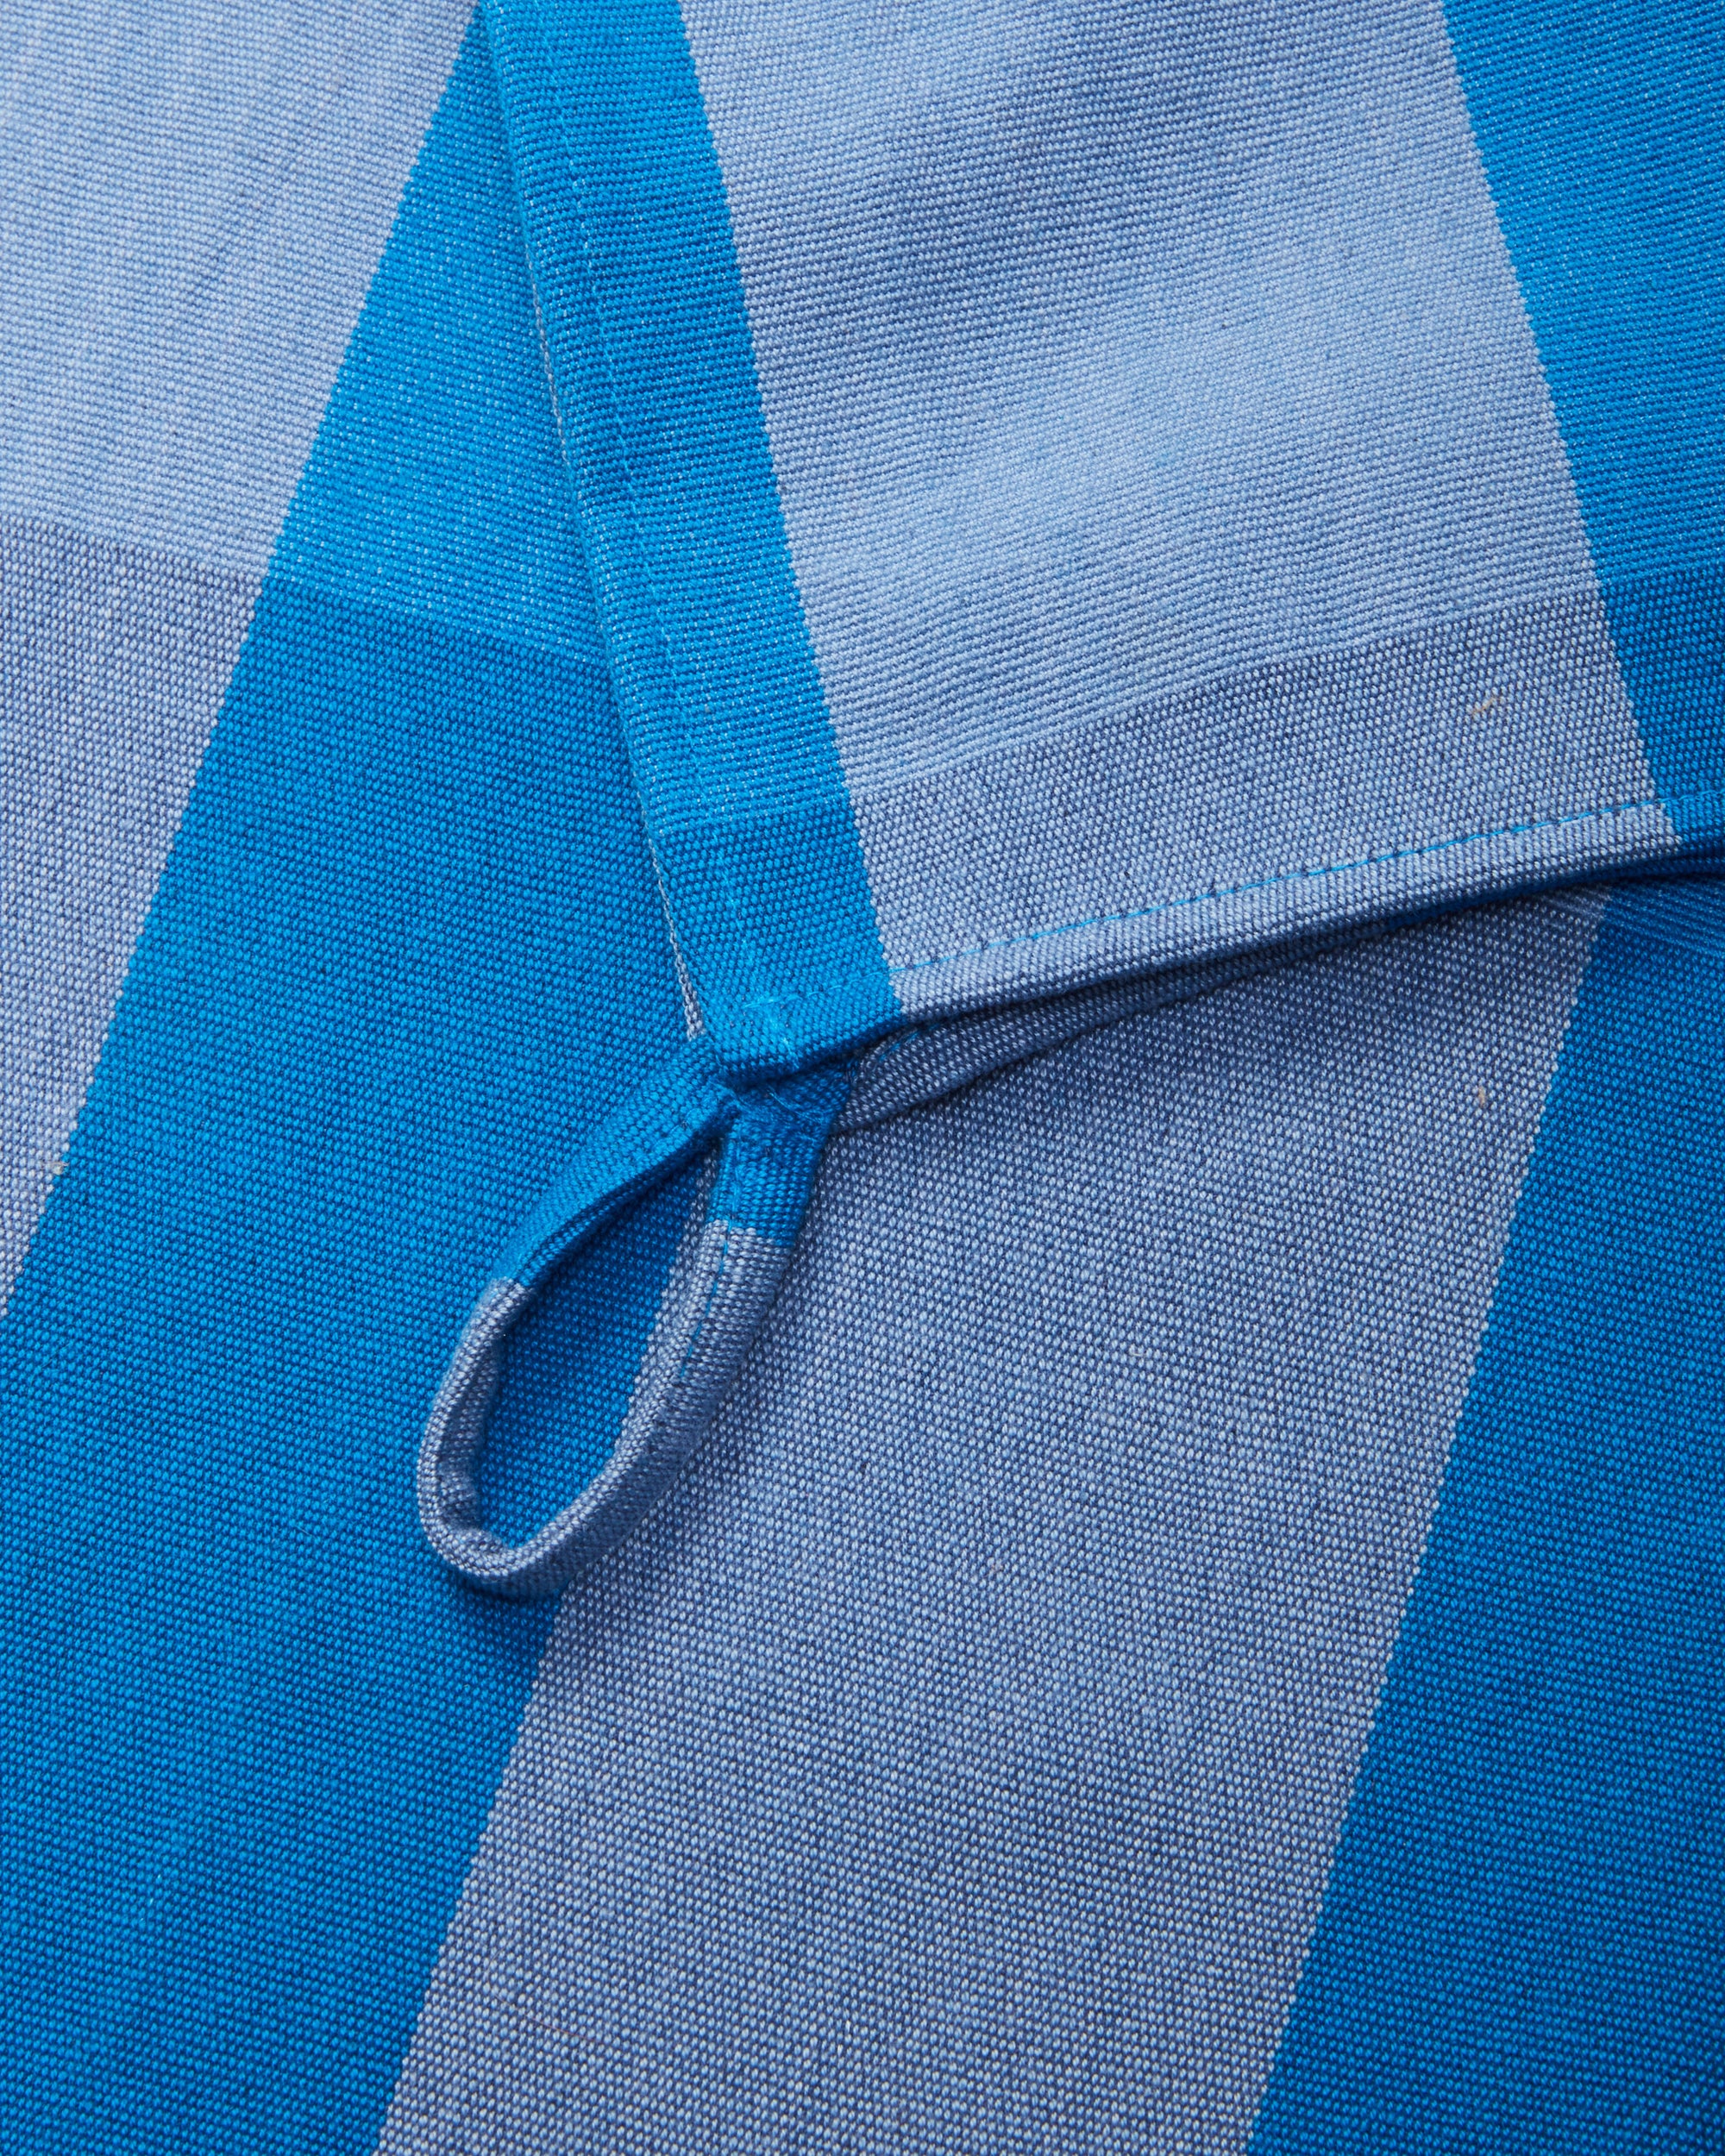 ethically handwoven cotton MINNA sol tea towel, hand towel, kitchen towel, in cobalt blue with hanging loop